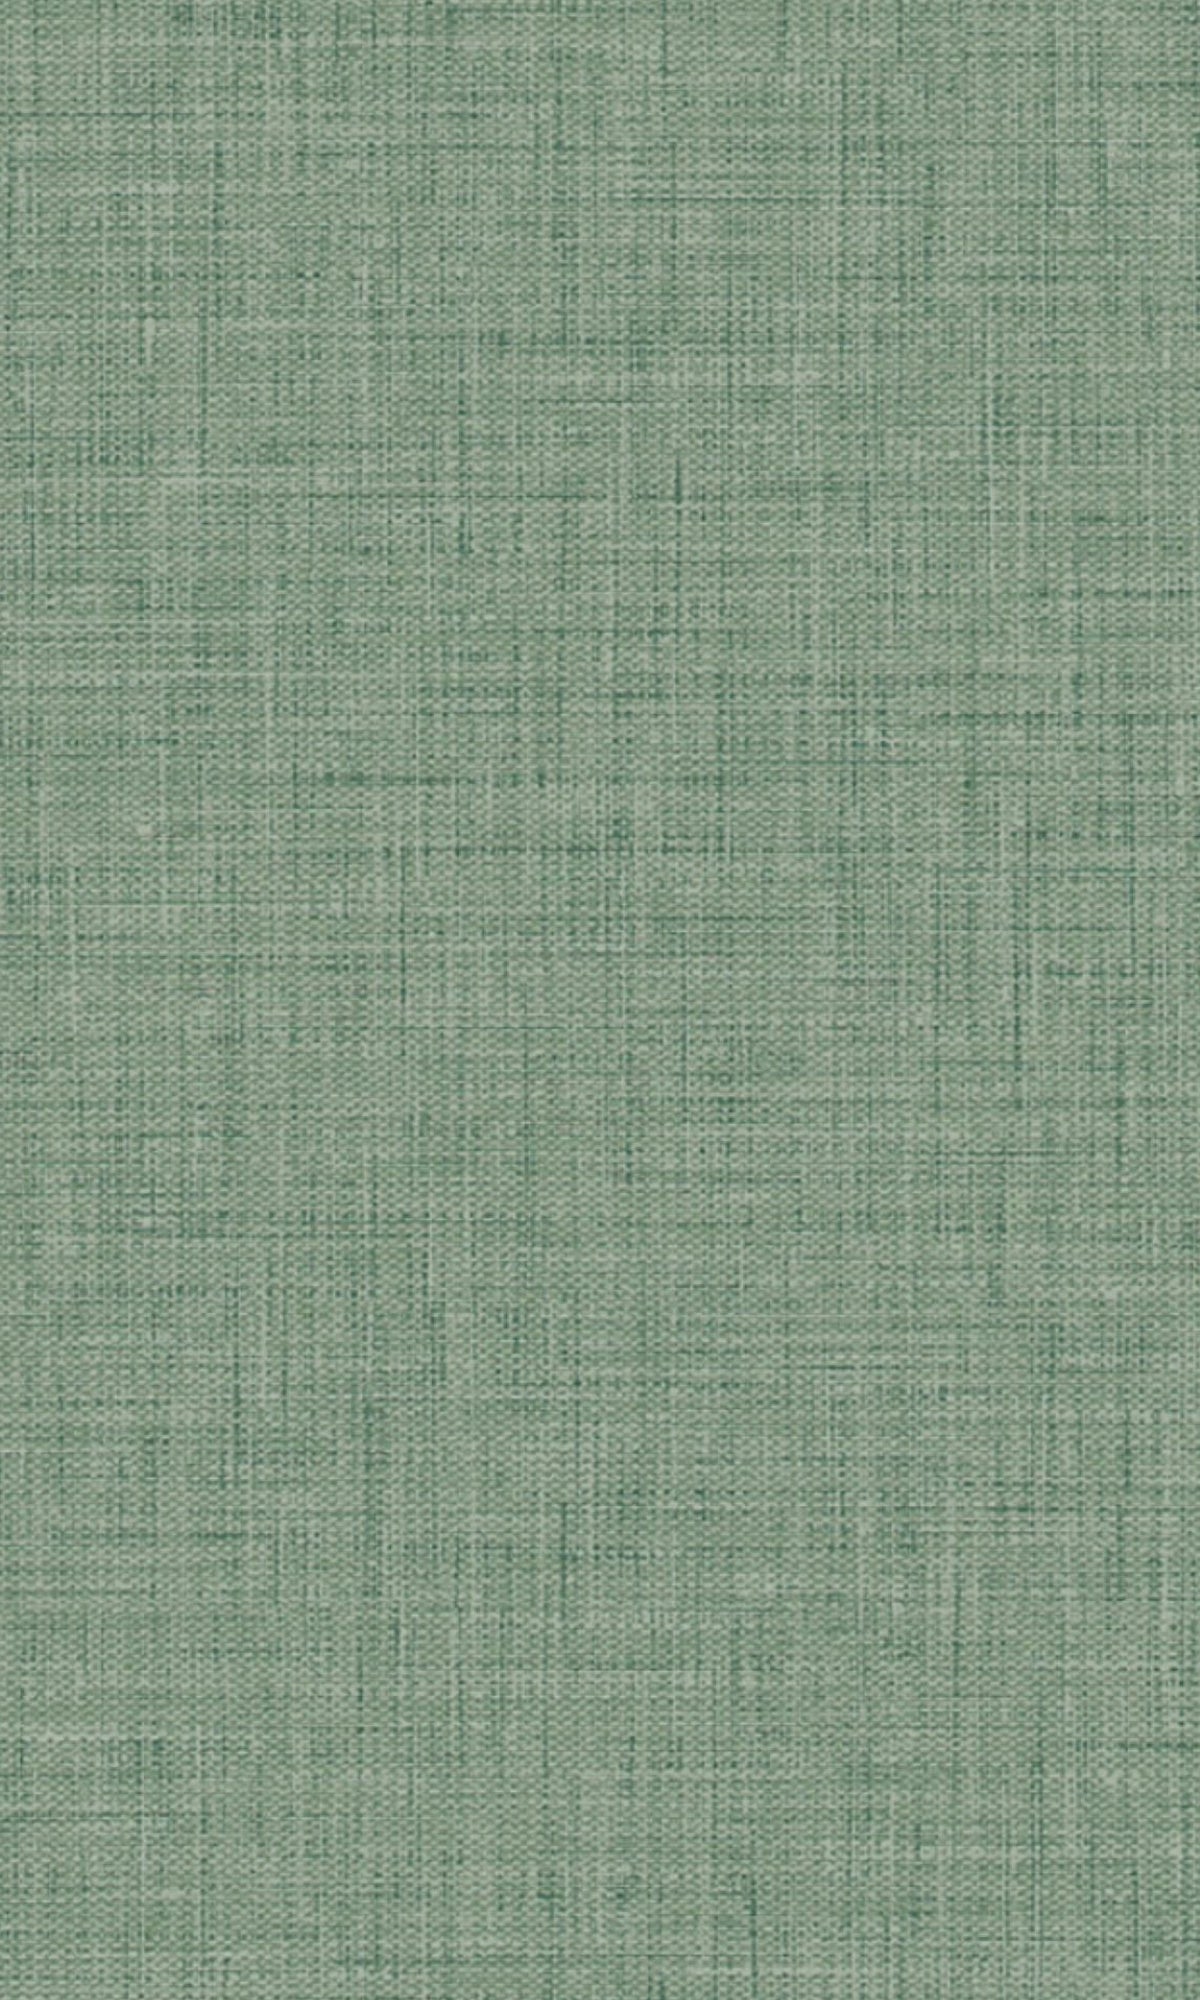 Lush Fern Fabric Like Textured Vinyl Commercial Wallpaper C7605